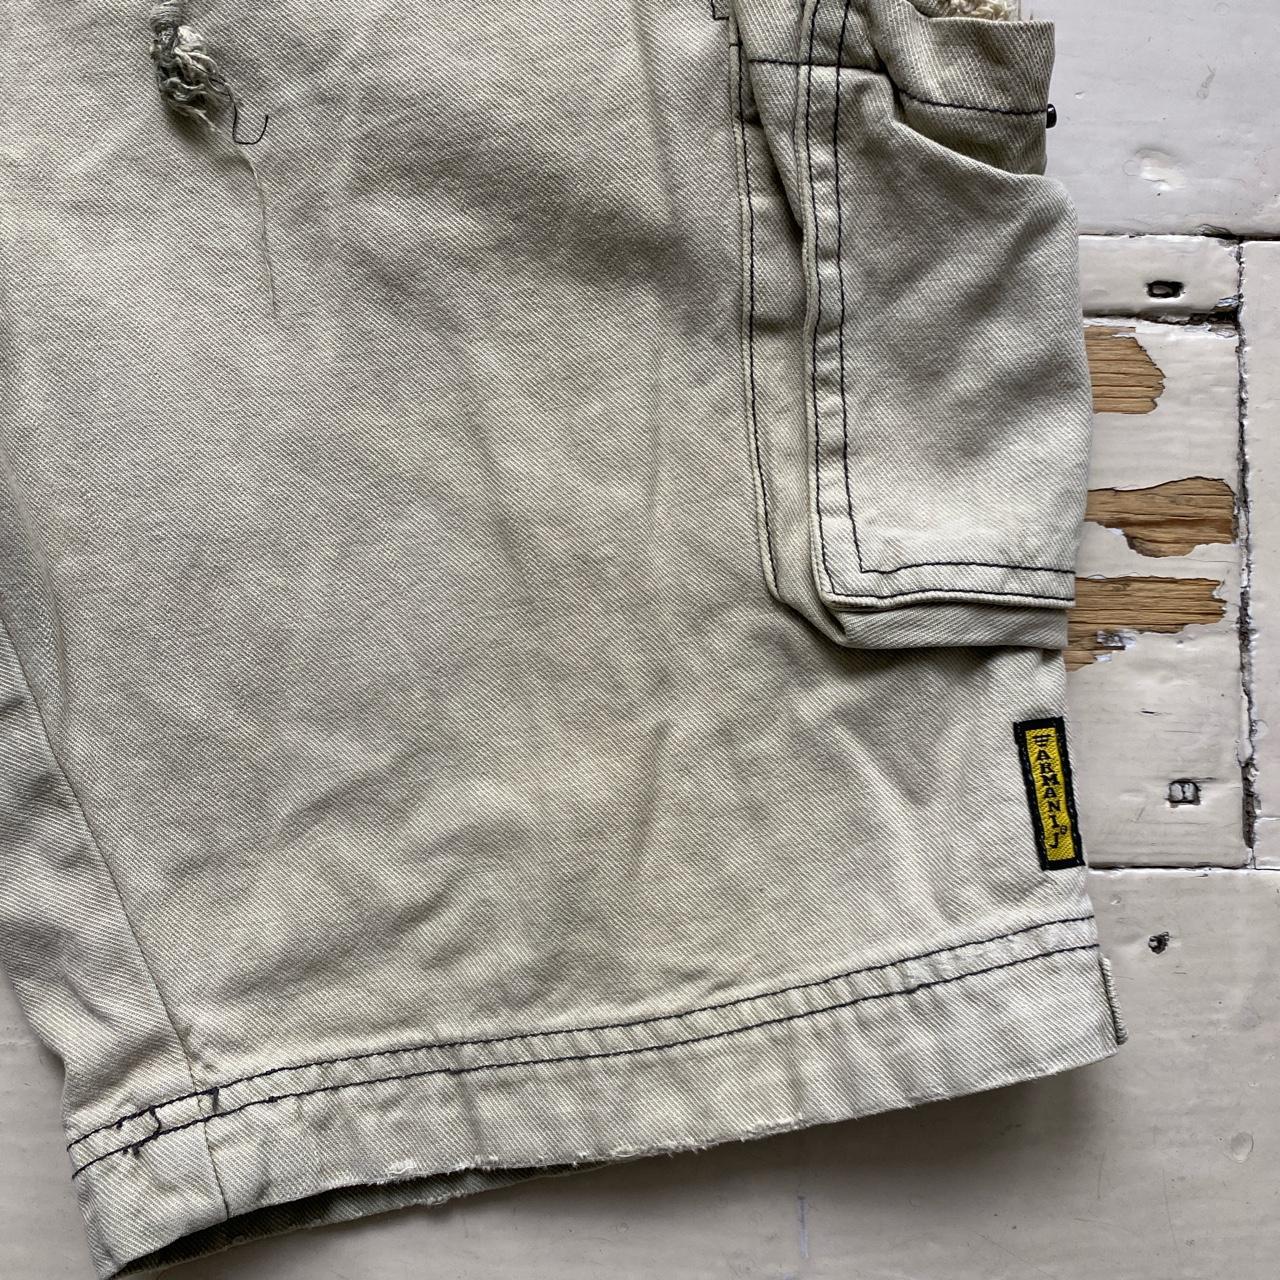 Armani Jeans Vintage Cargo Army Jorts Jean Shorts